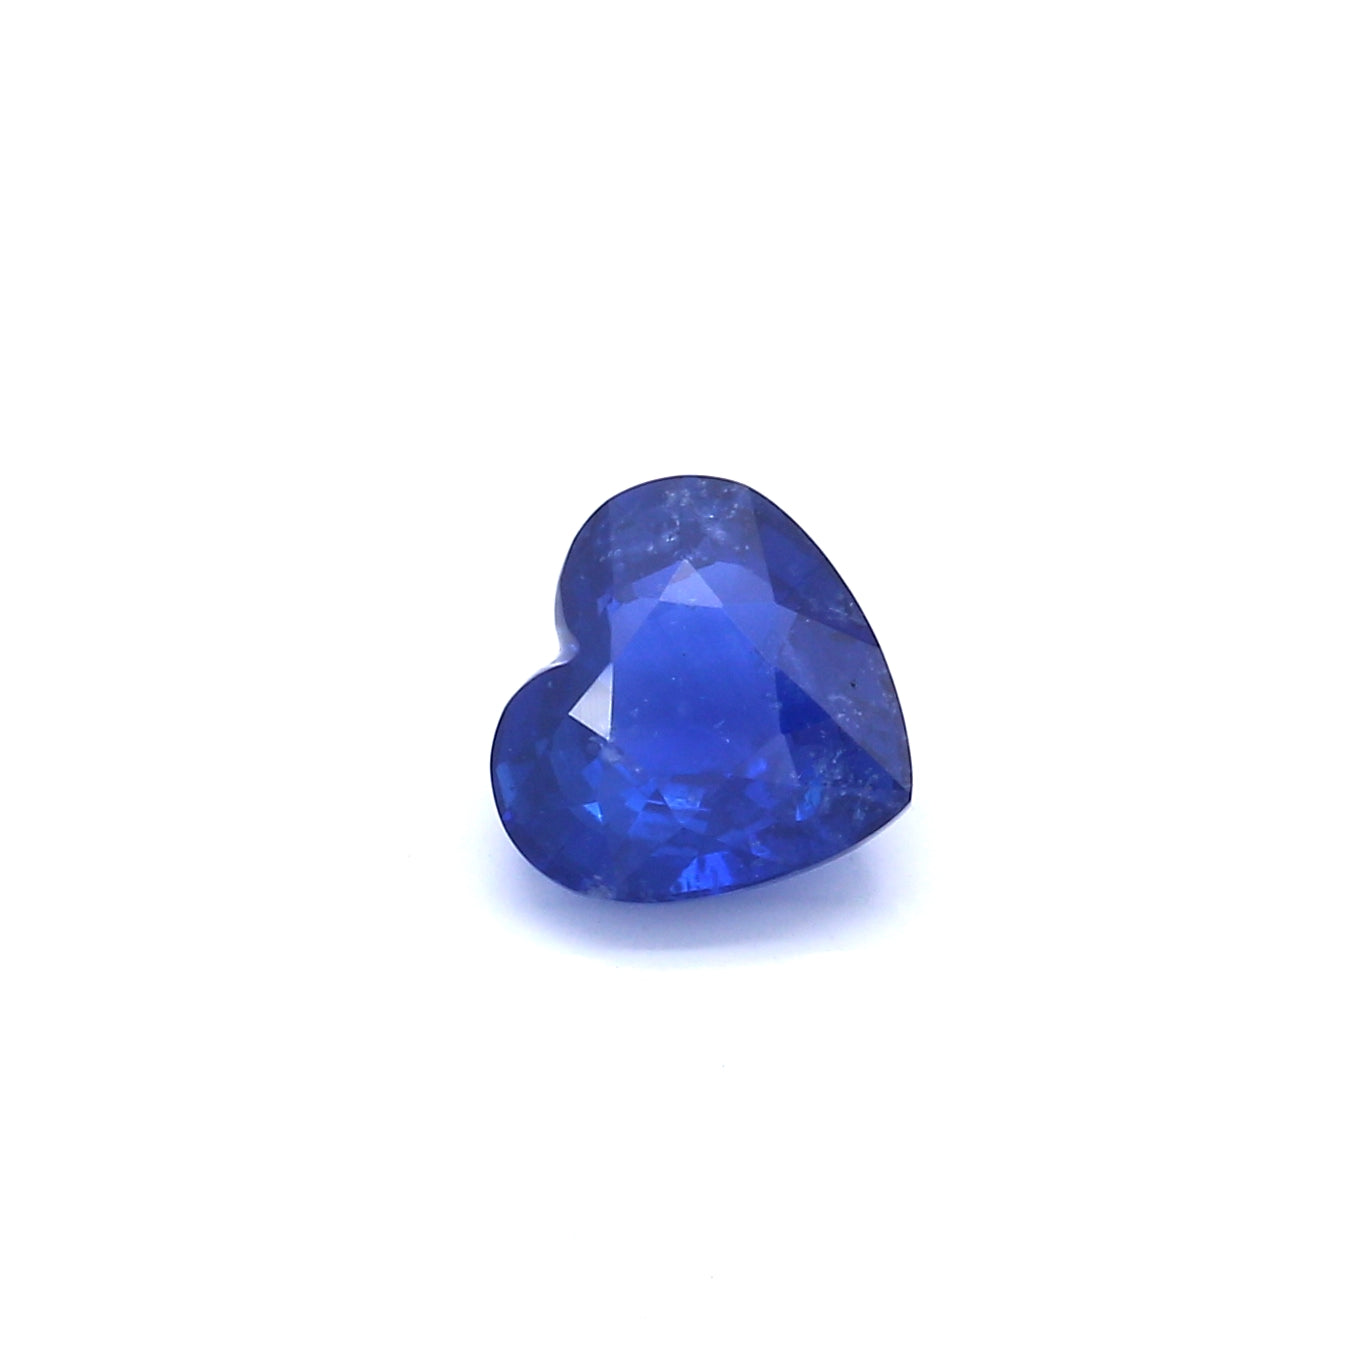 1.81ct Heart Shape Sapphire, Heated, Madagascar - 7.02 x 7.56 x 4.11mm